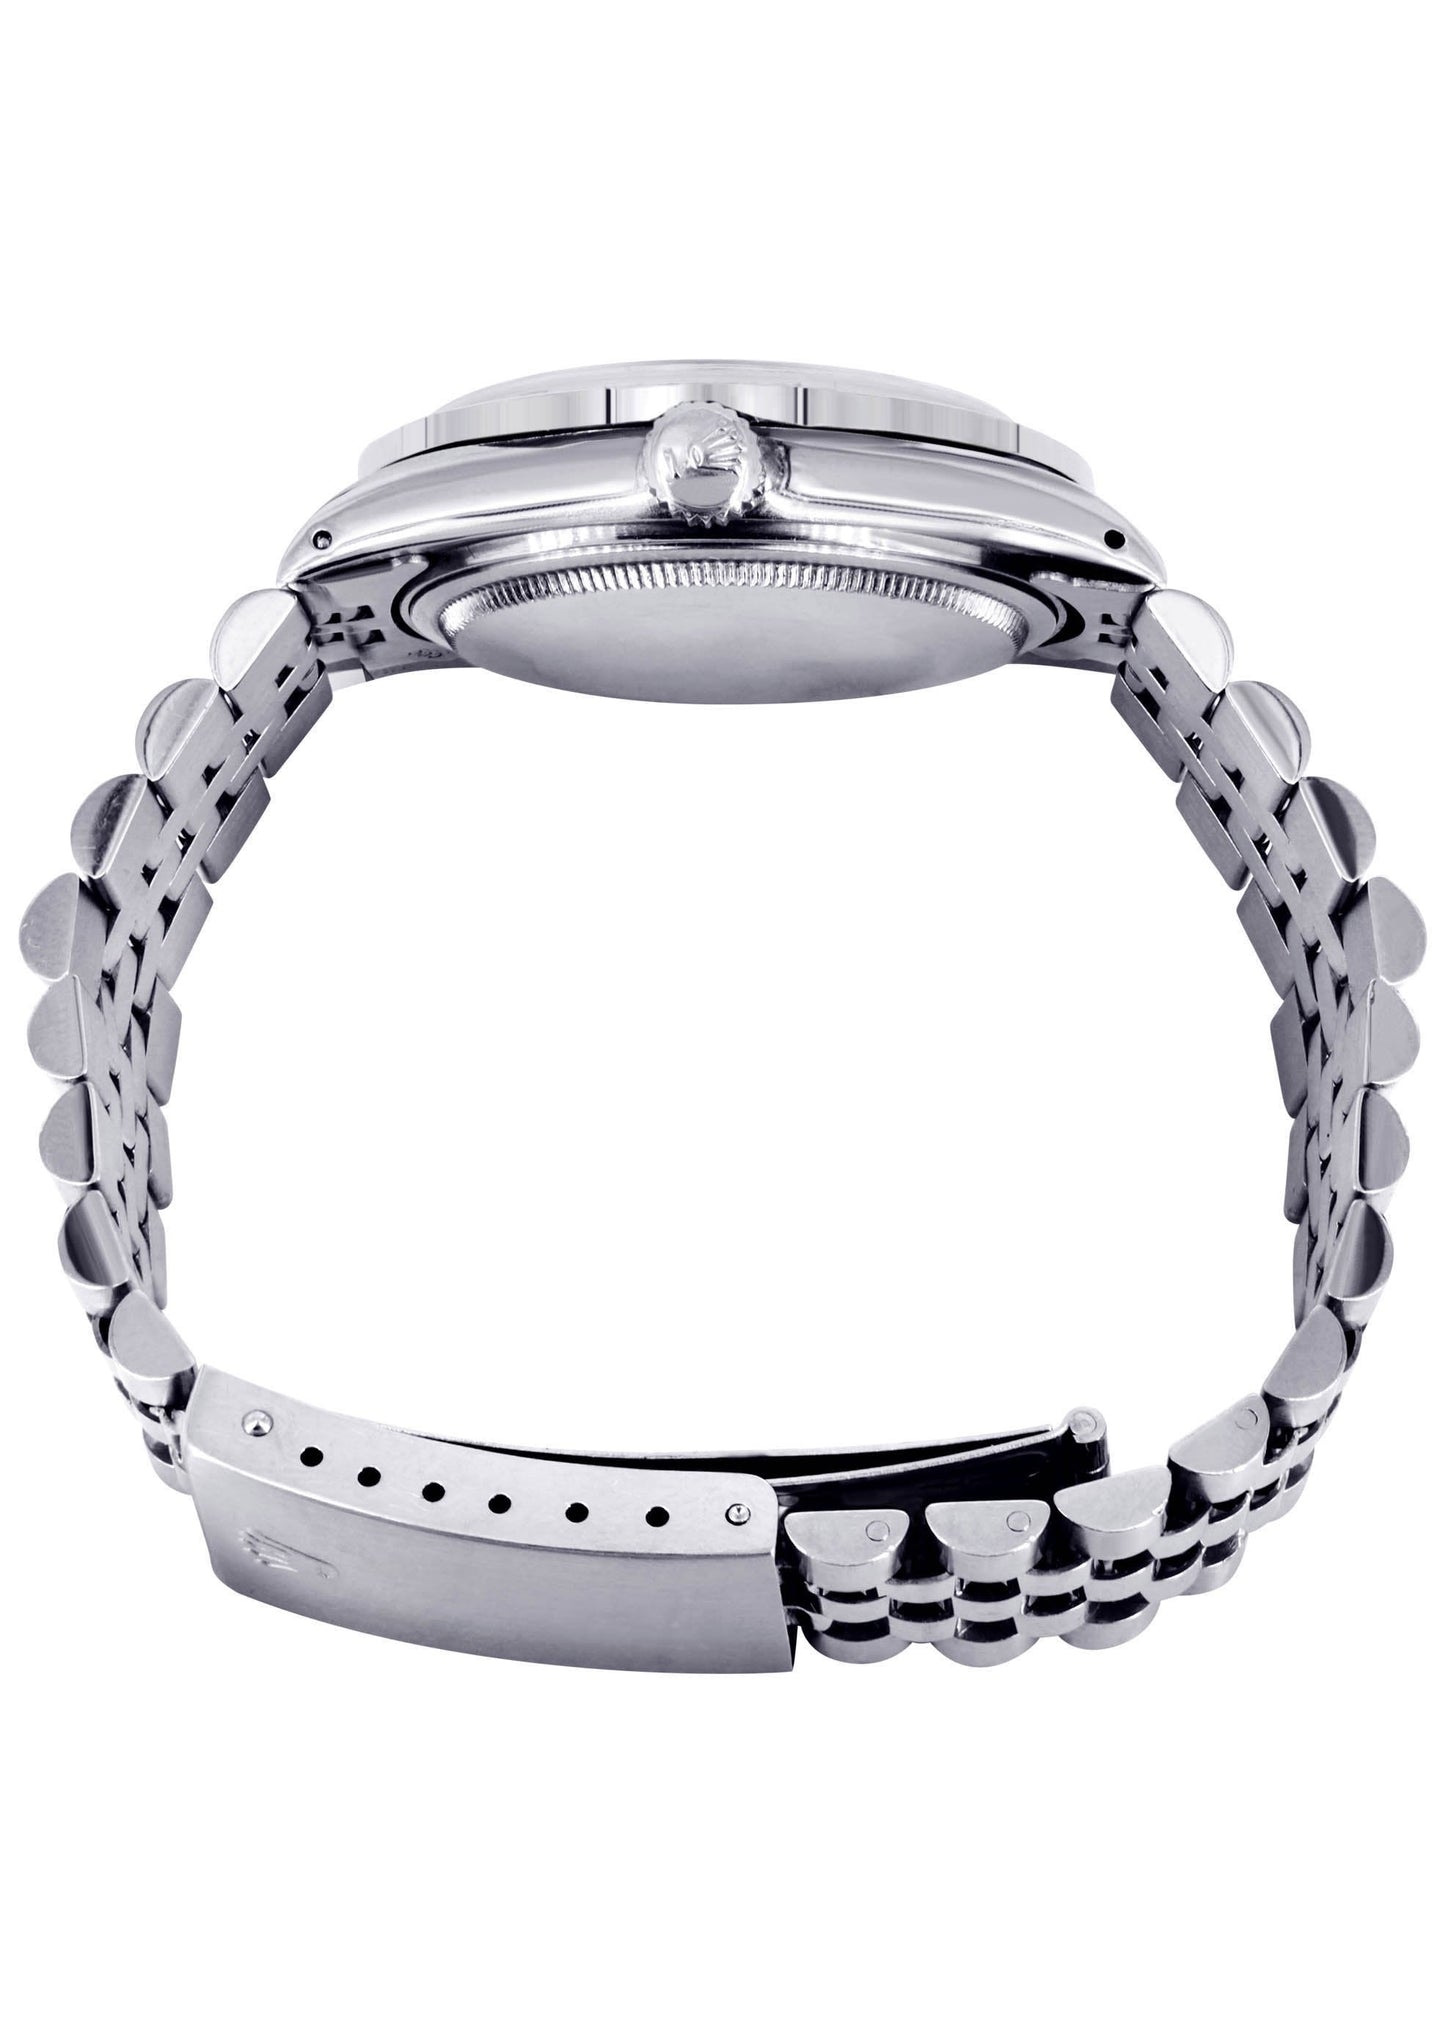 Diamond Gold Rolex Watch For Men 16200 | 36Mm | Rainbow Sapphire Bezel | Blue Arabic Numeral Dial | Jubilee Band